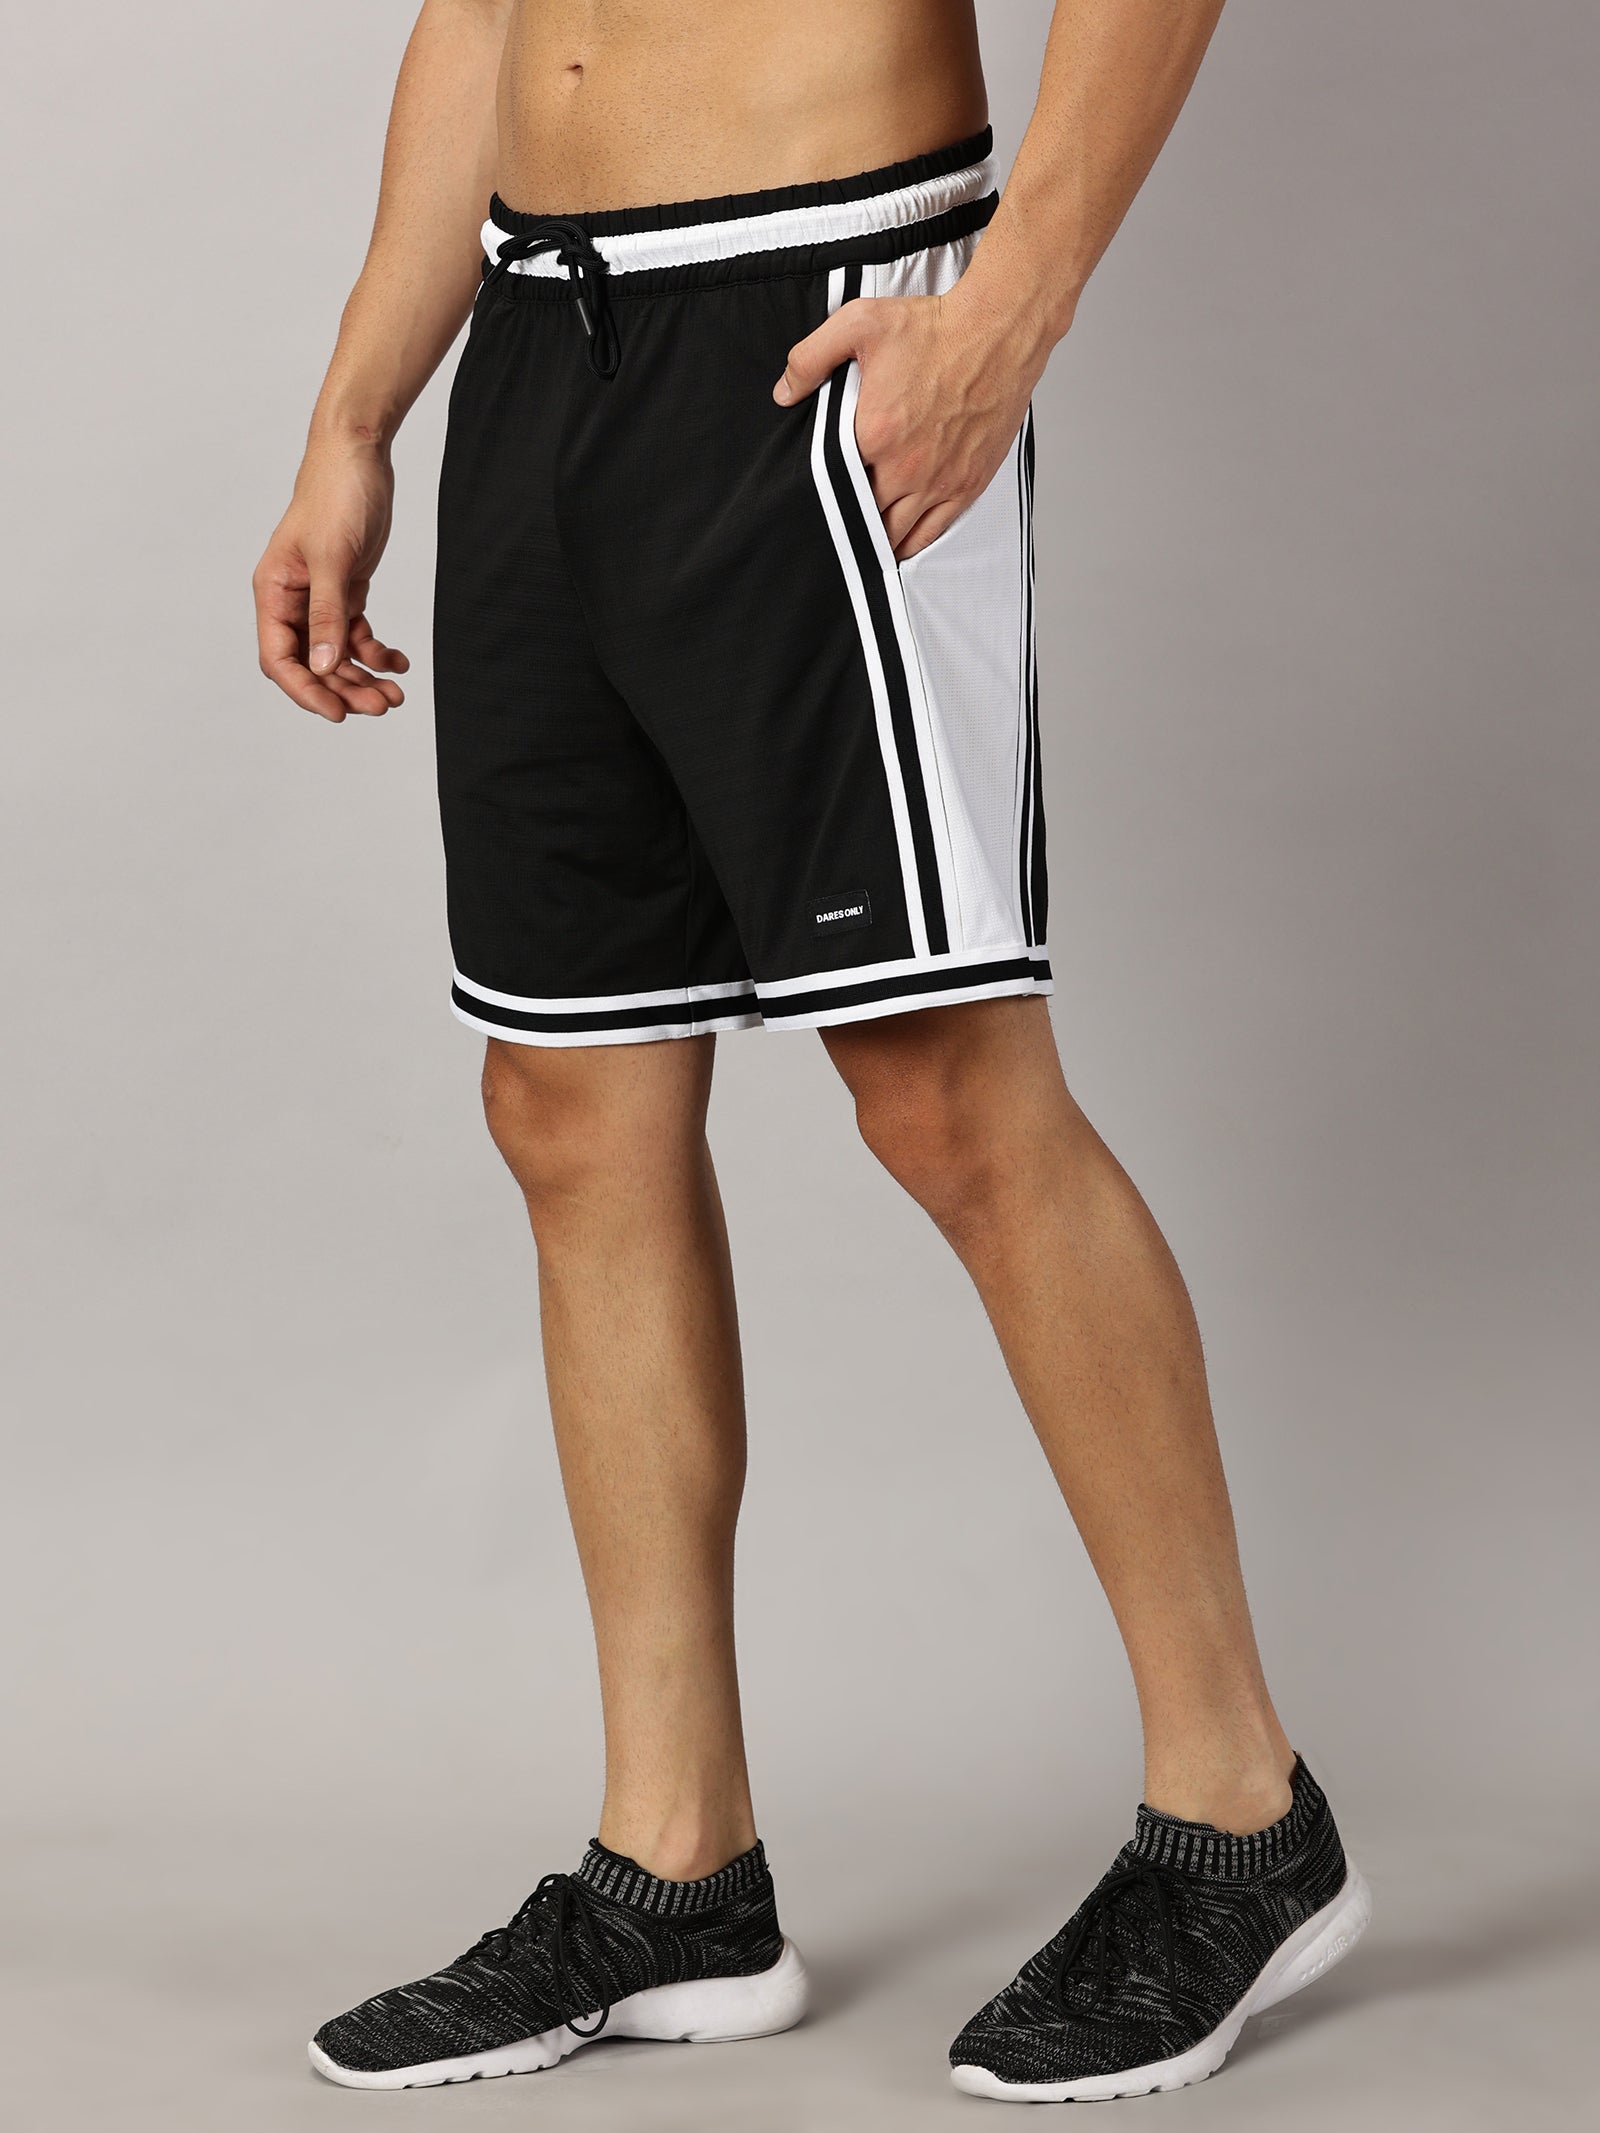 Defy Gravity Basketball shorts Black and White